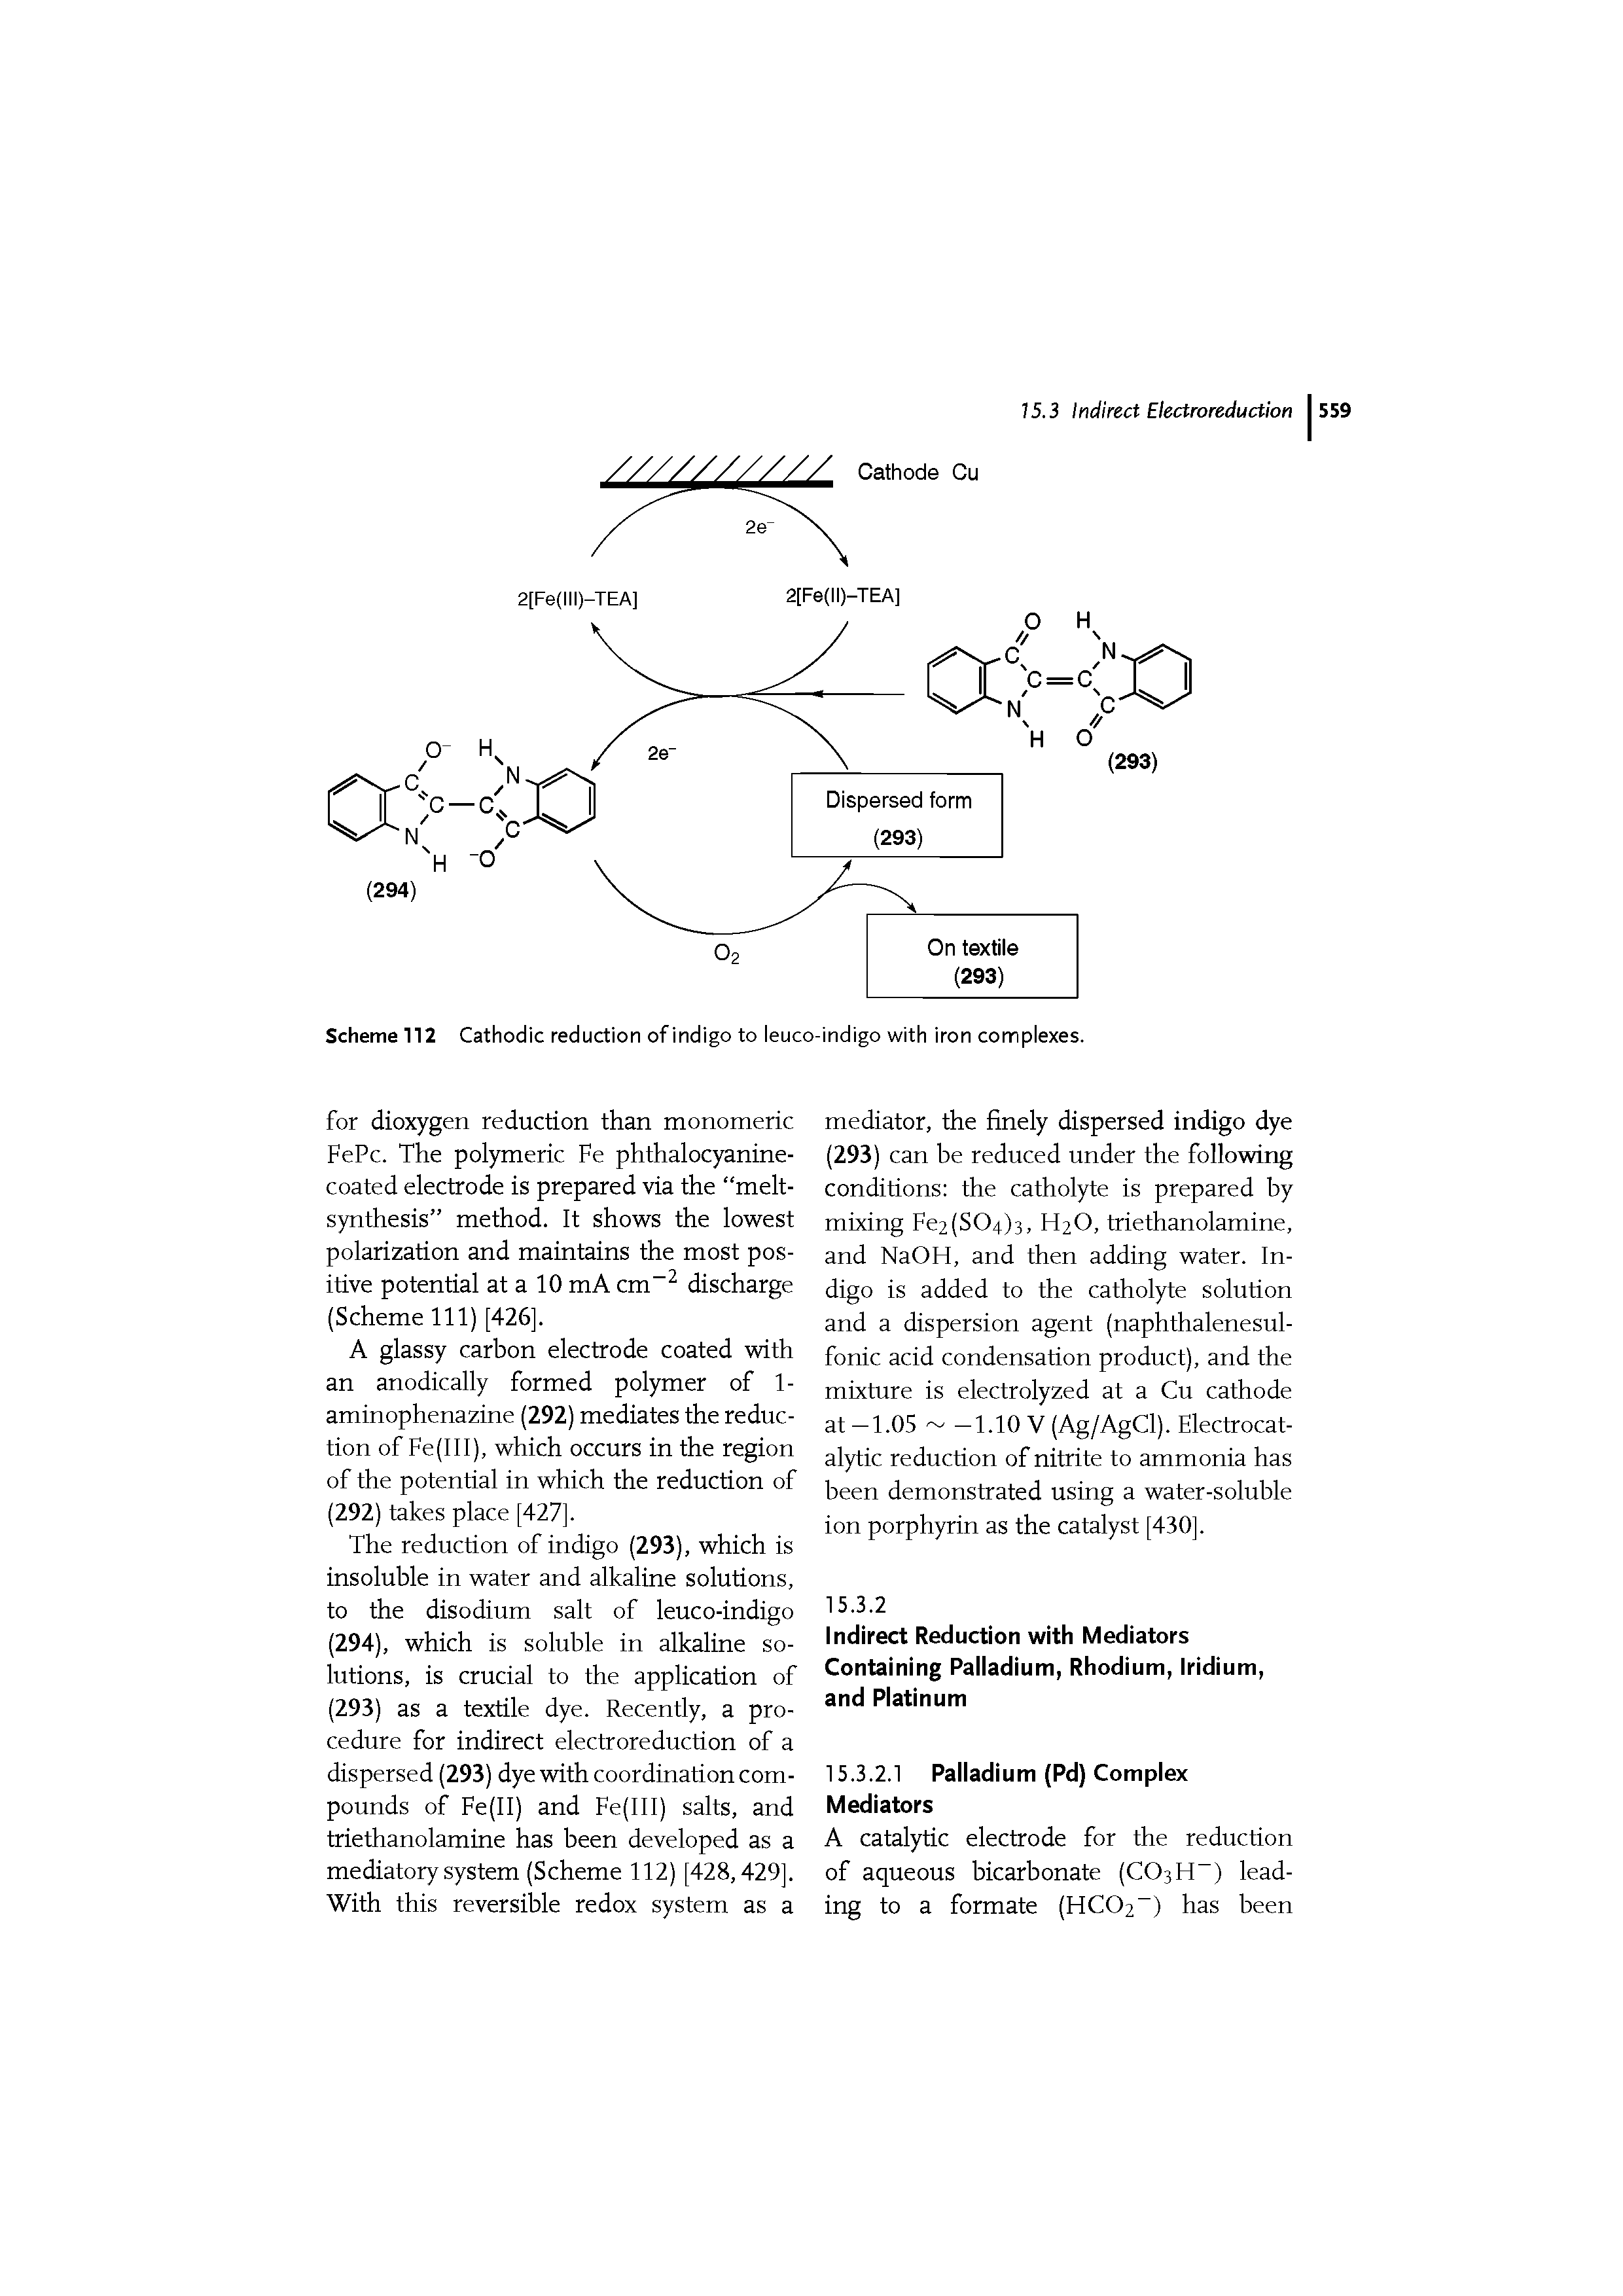 Scheme 112 Cathodic reduction of indigo to leuco-indigo with iron complexes.